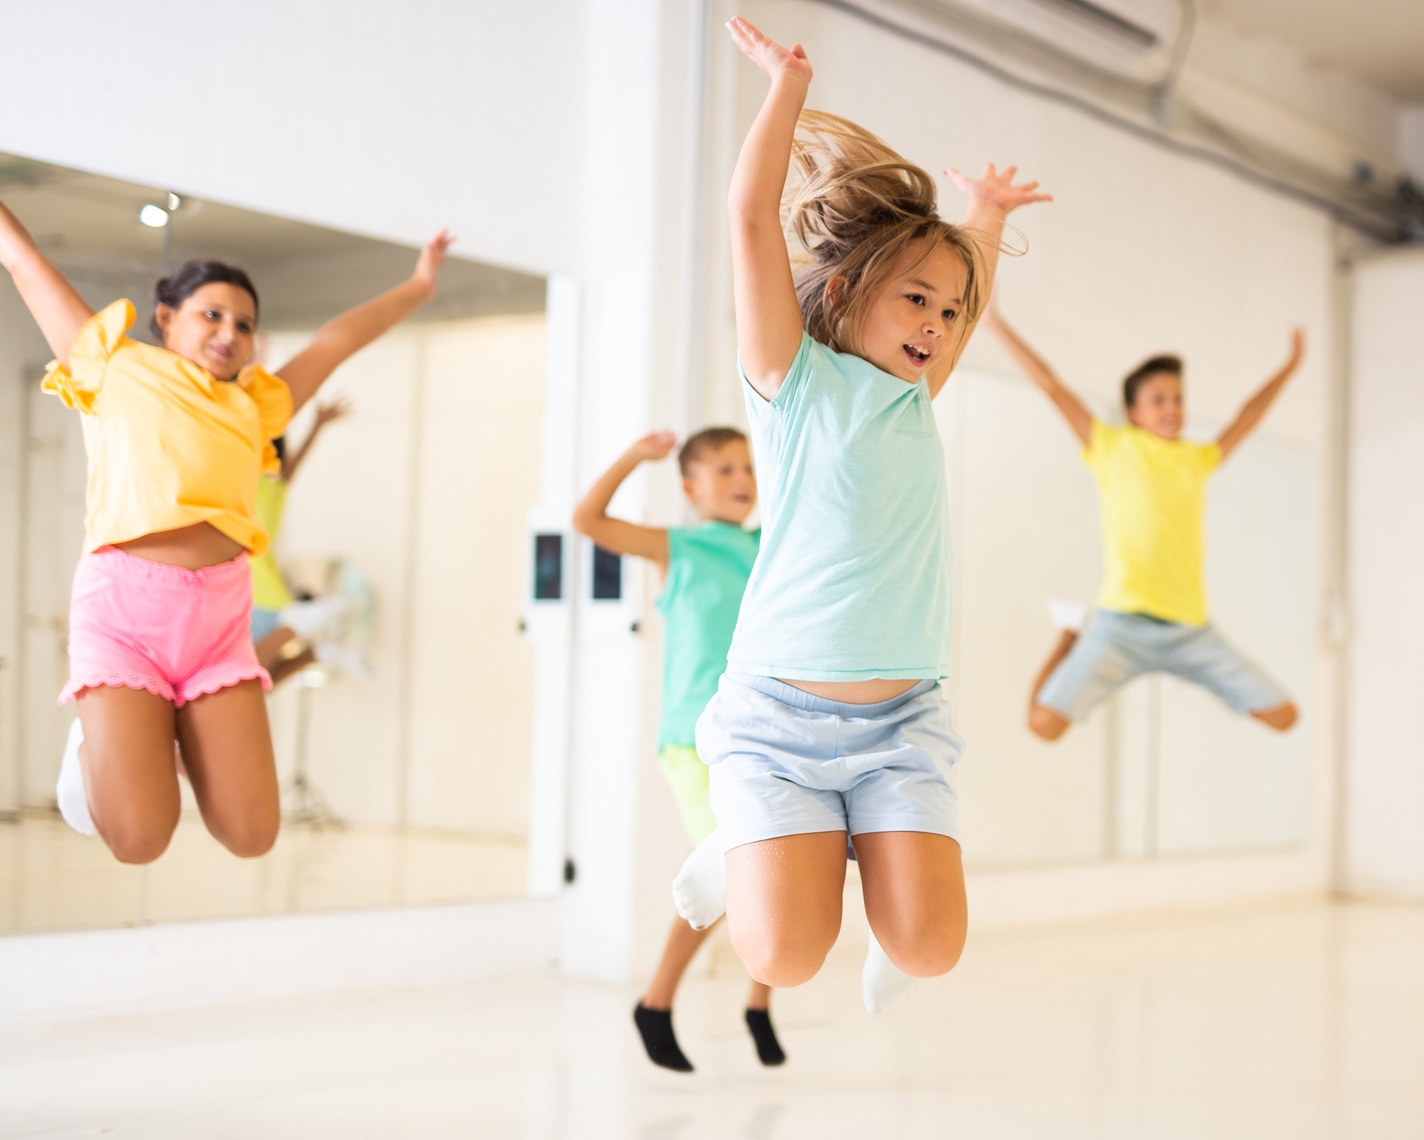 Kids jumping in dance studio